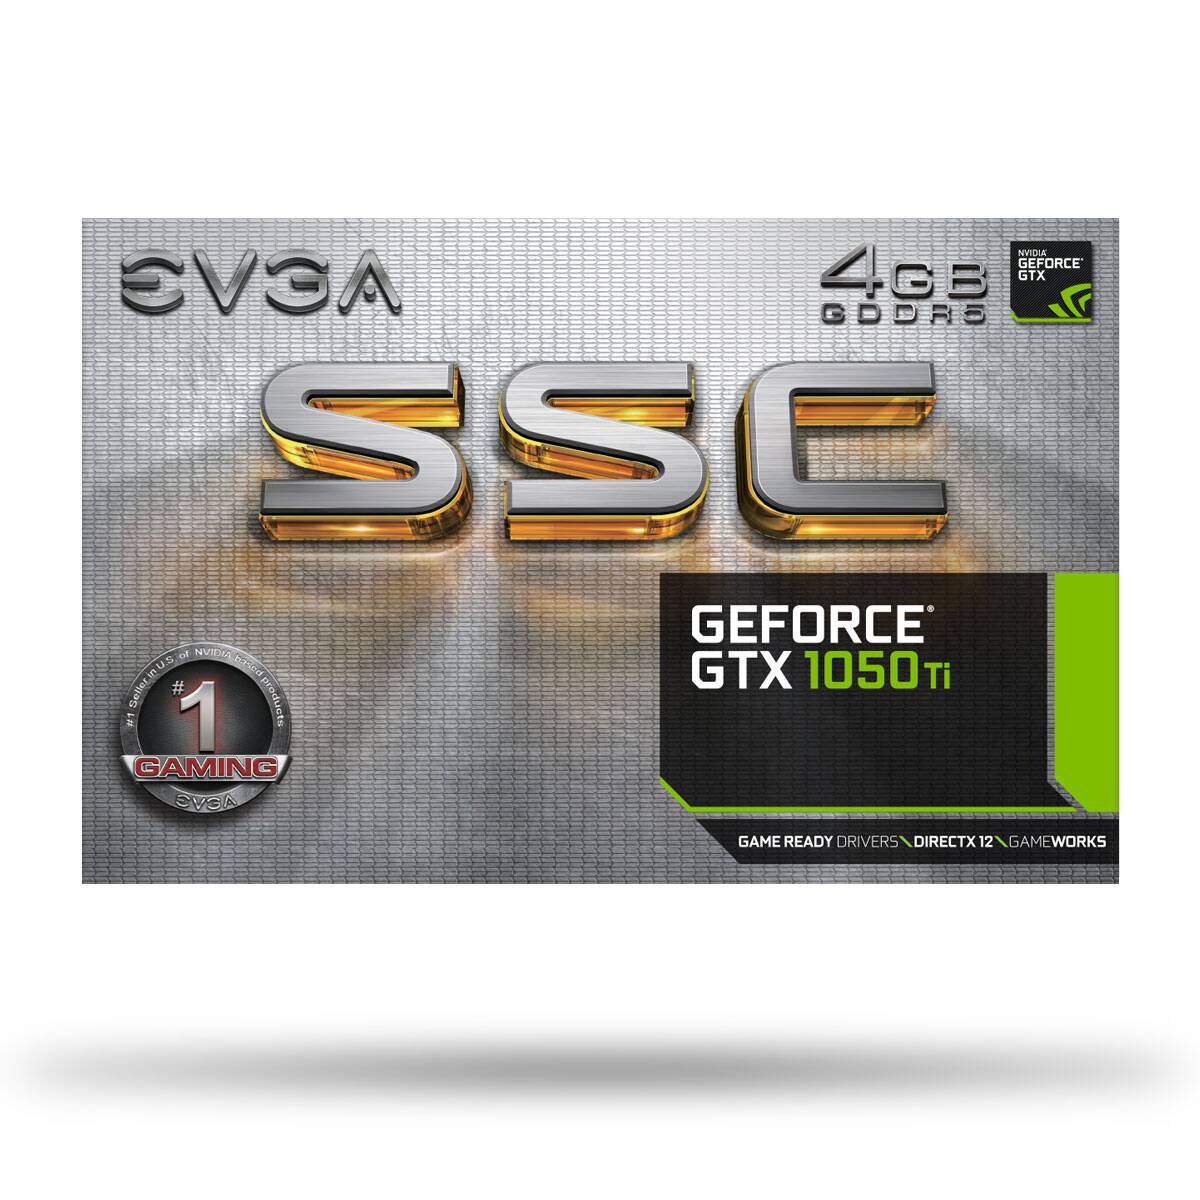 EVGA - JP - 製品 - EVGA GeForce GTX 